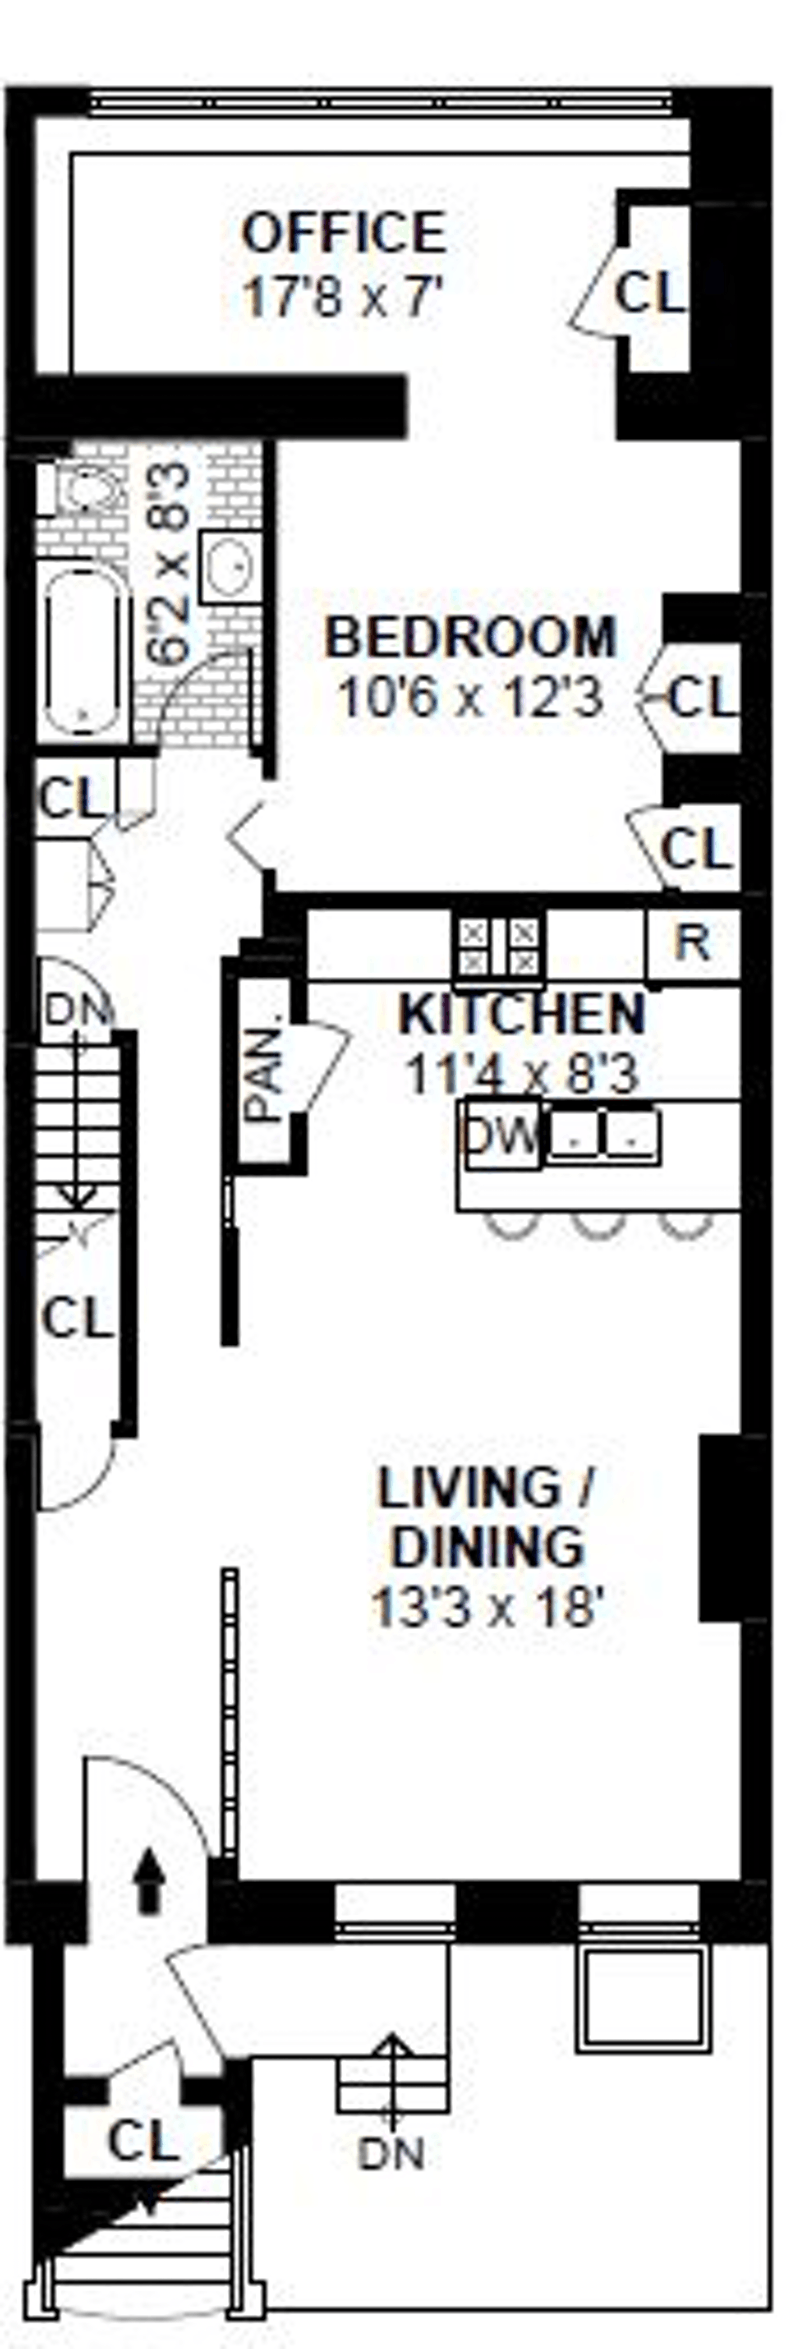 Floorplan for 1115 Bloomfield St, GRDN